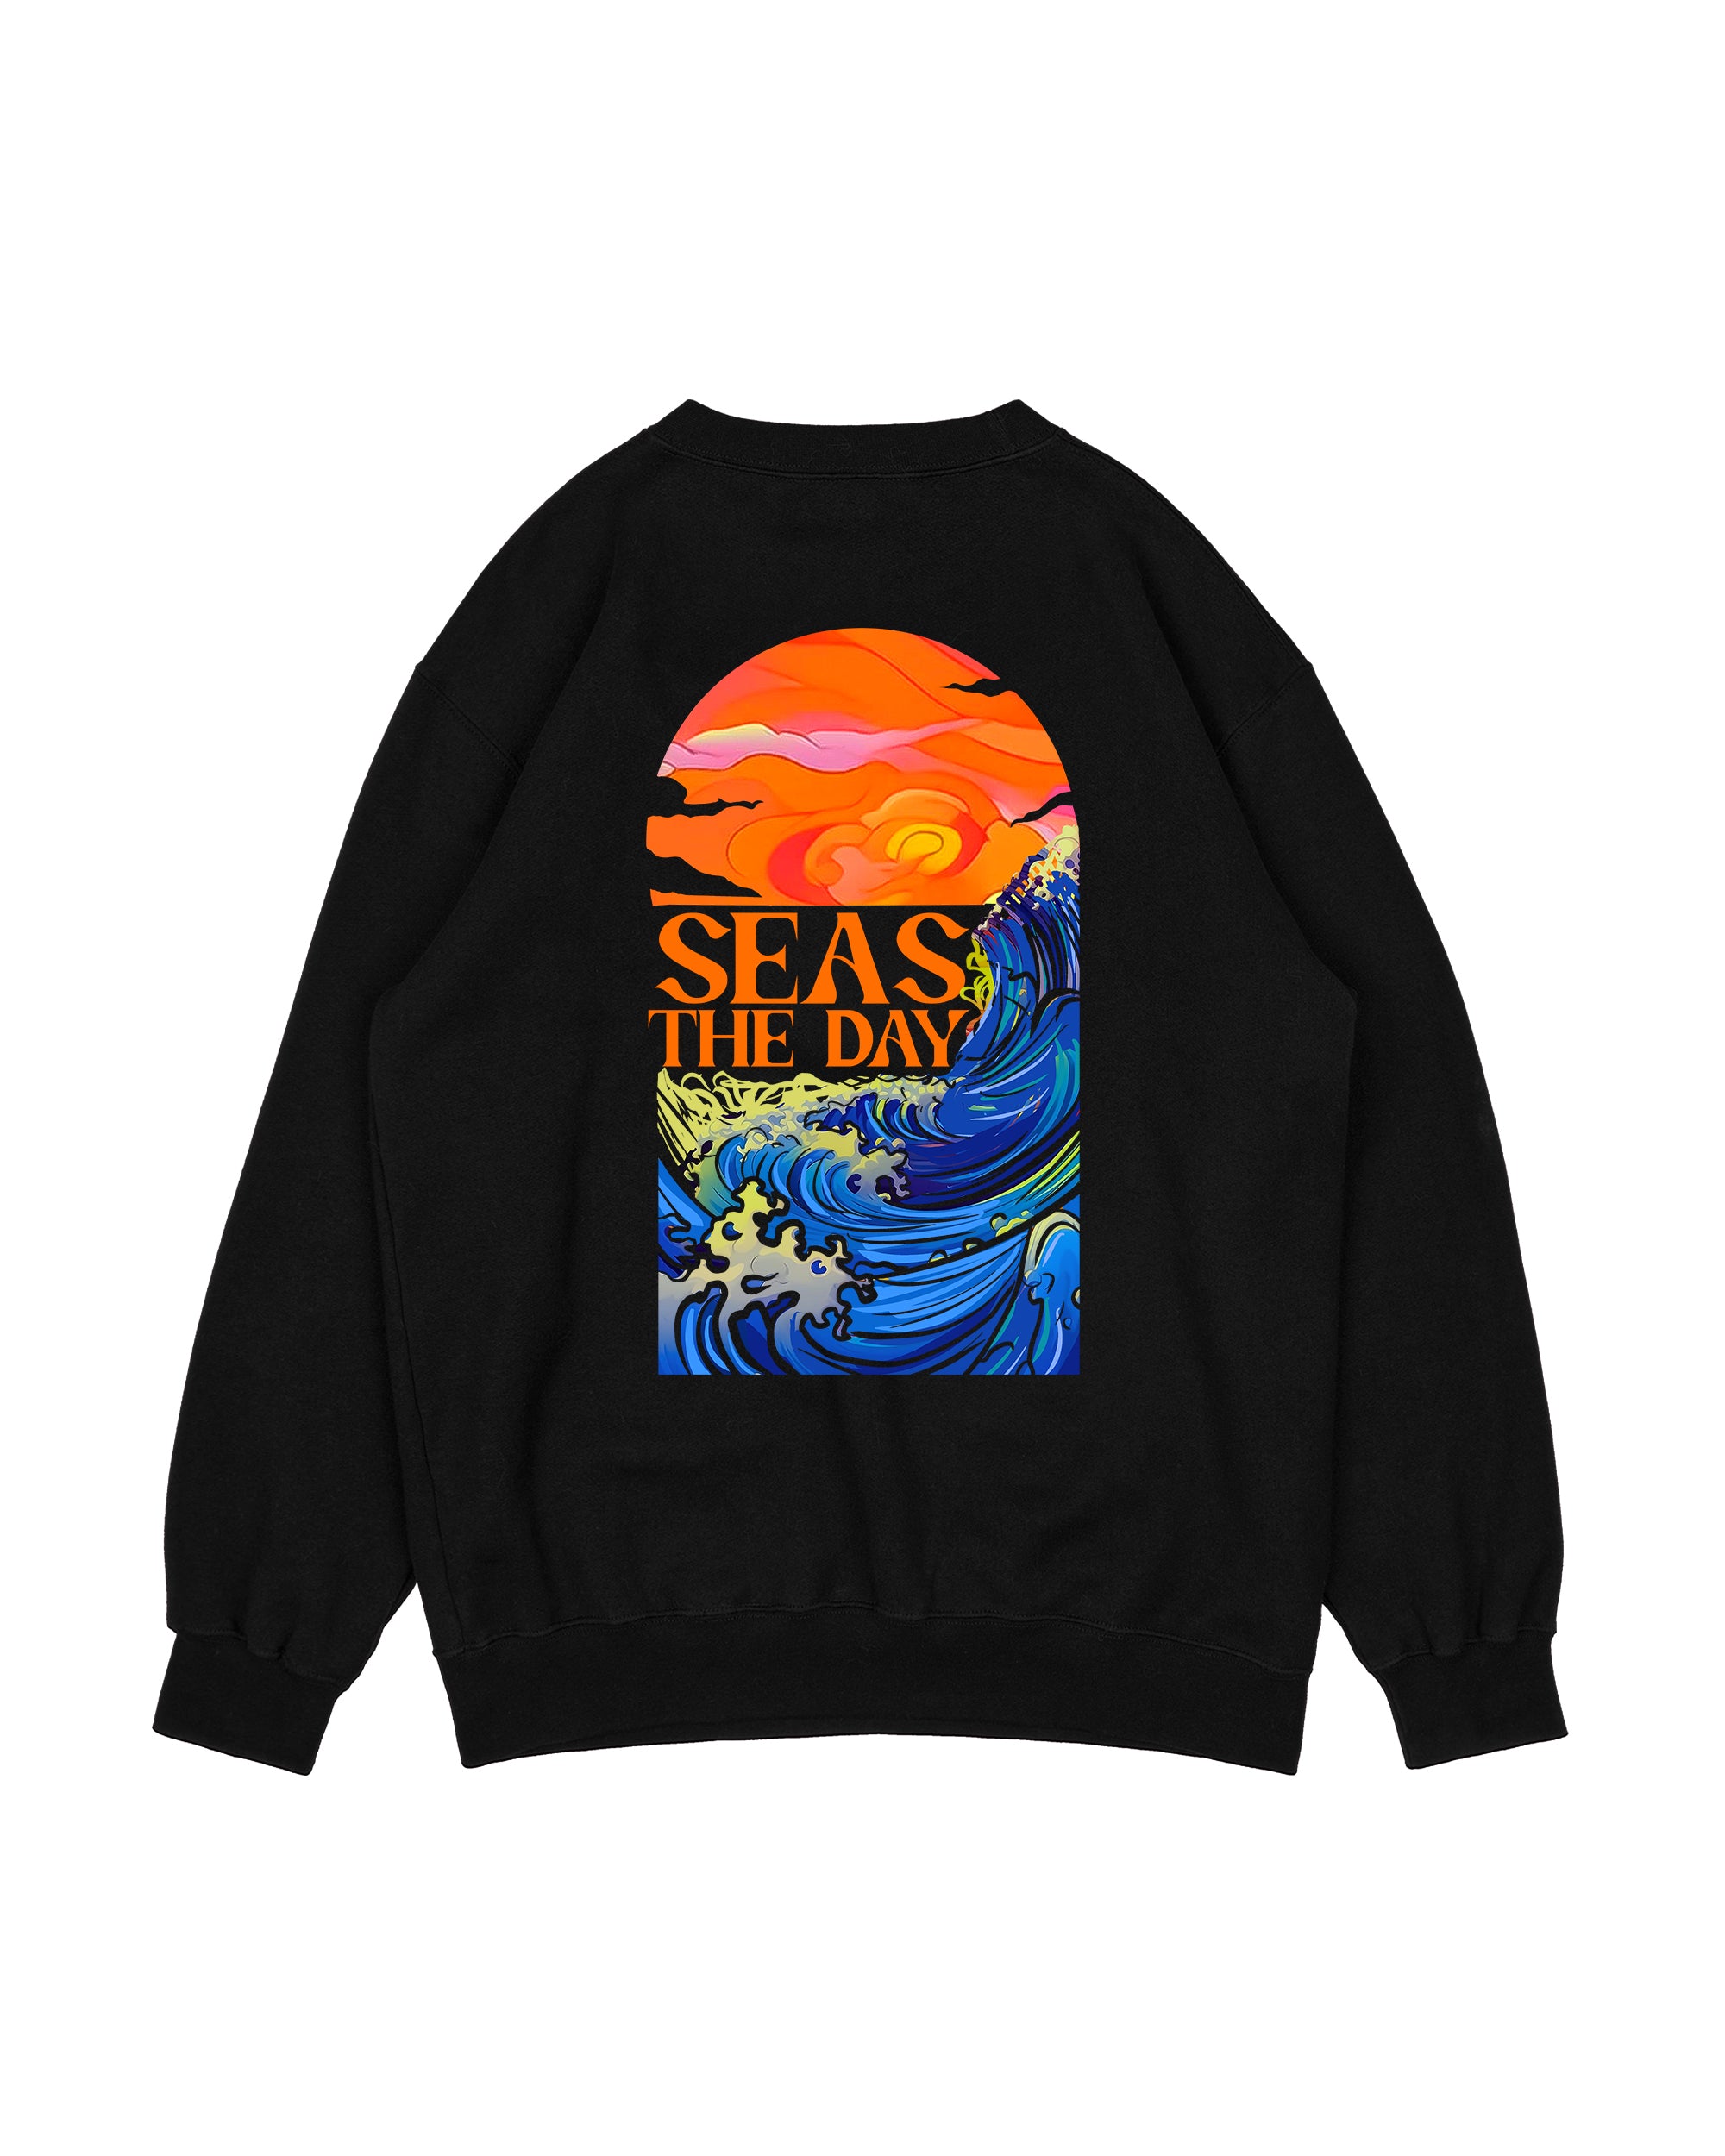 Seas The Day Sweatshirt